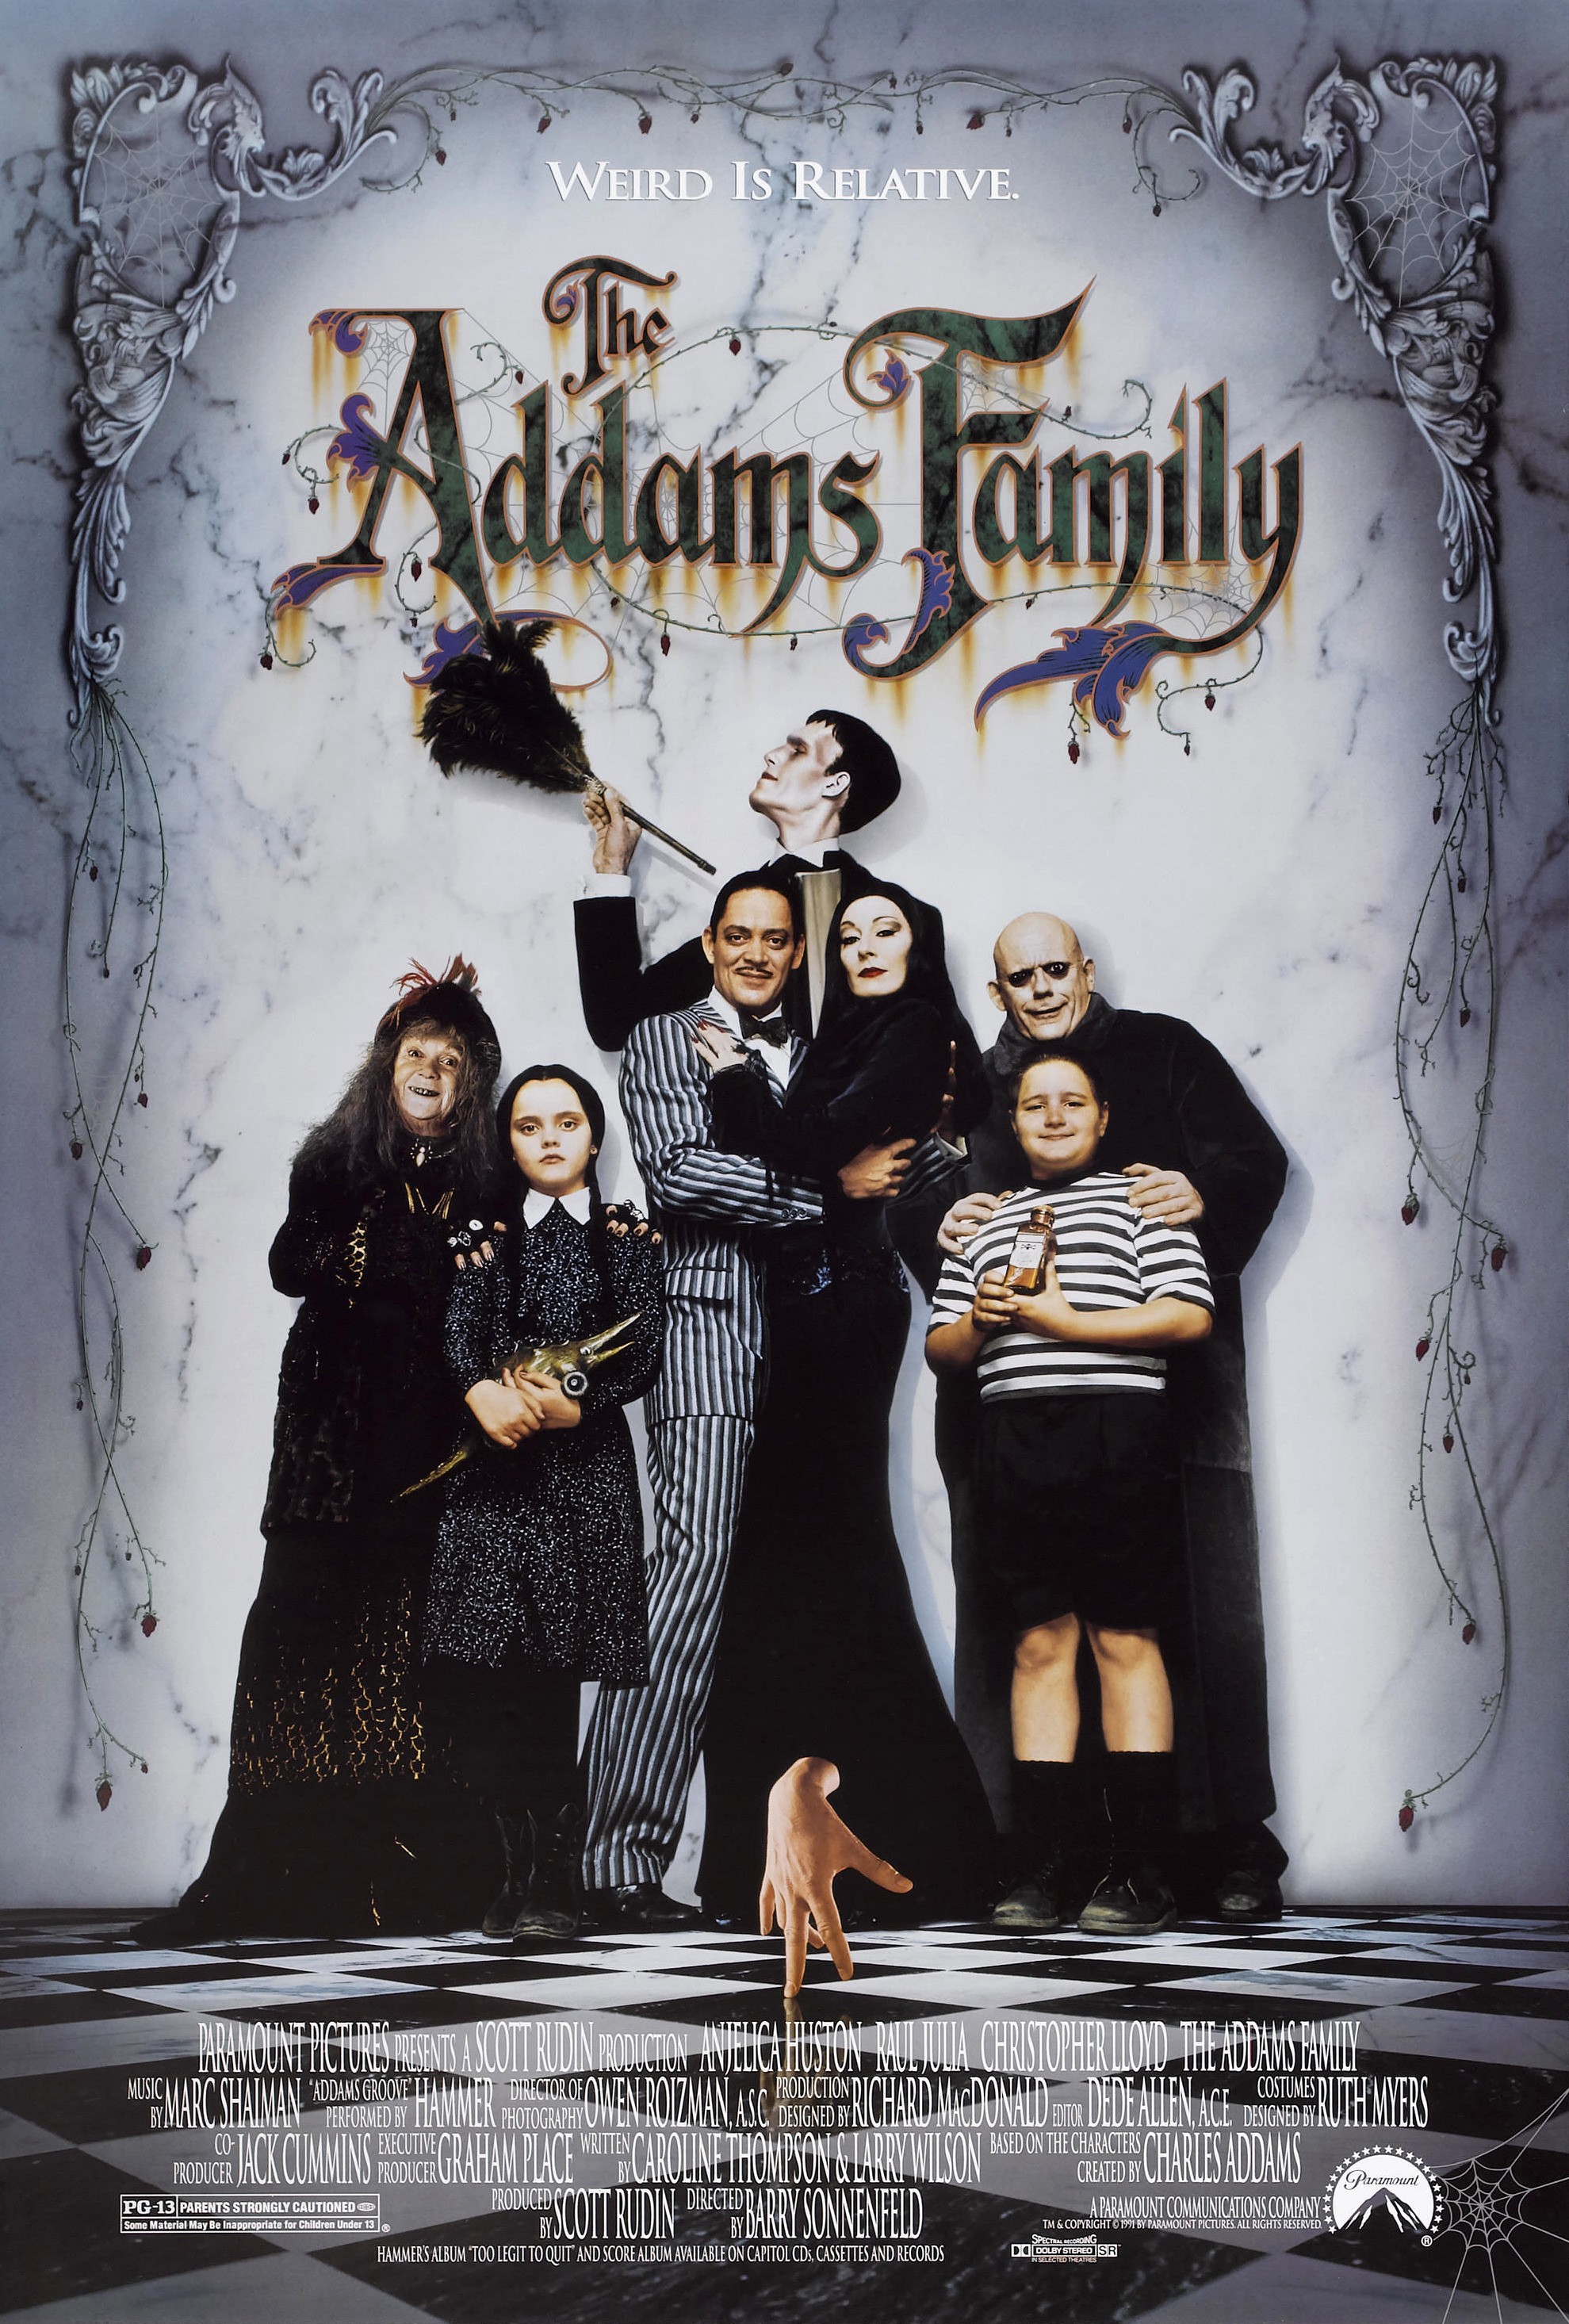 The Addams Family- Childhood Halloween Movies